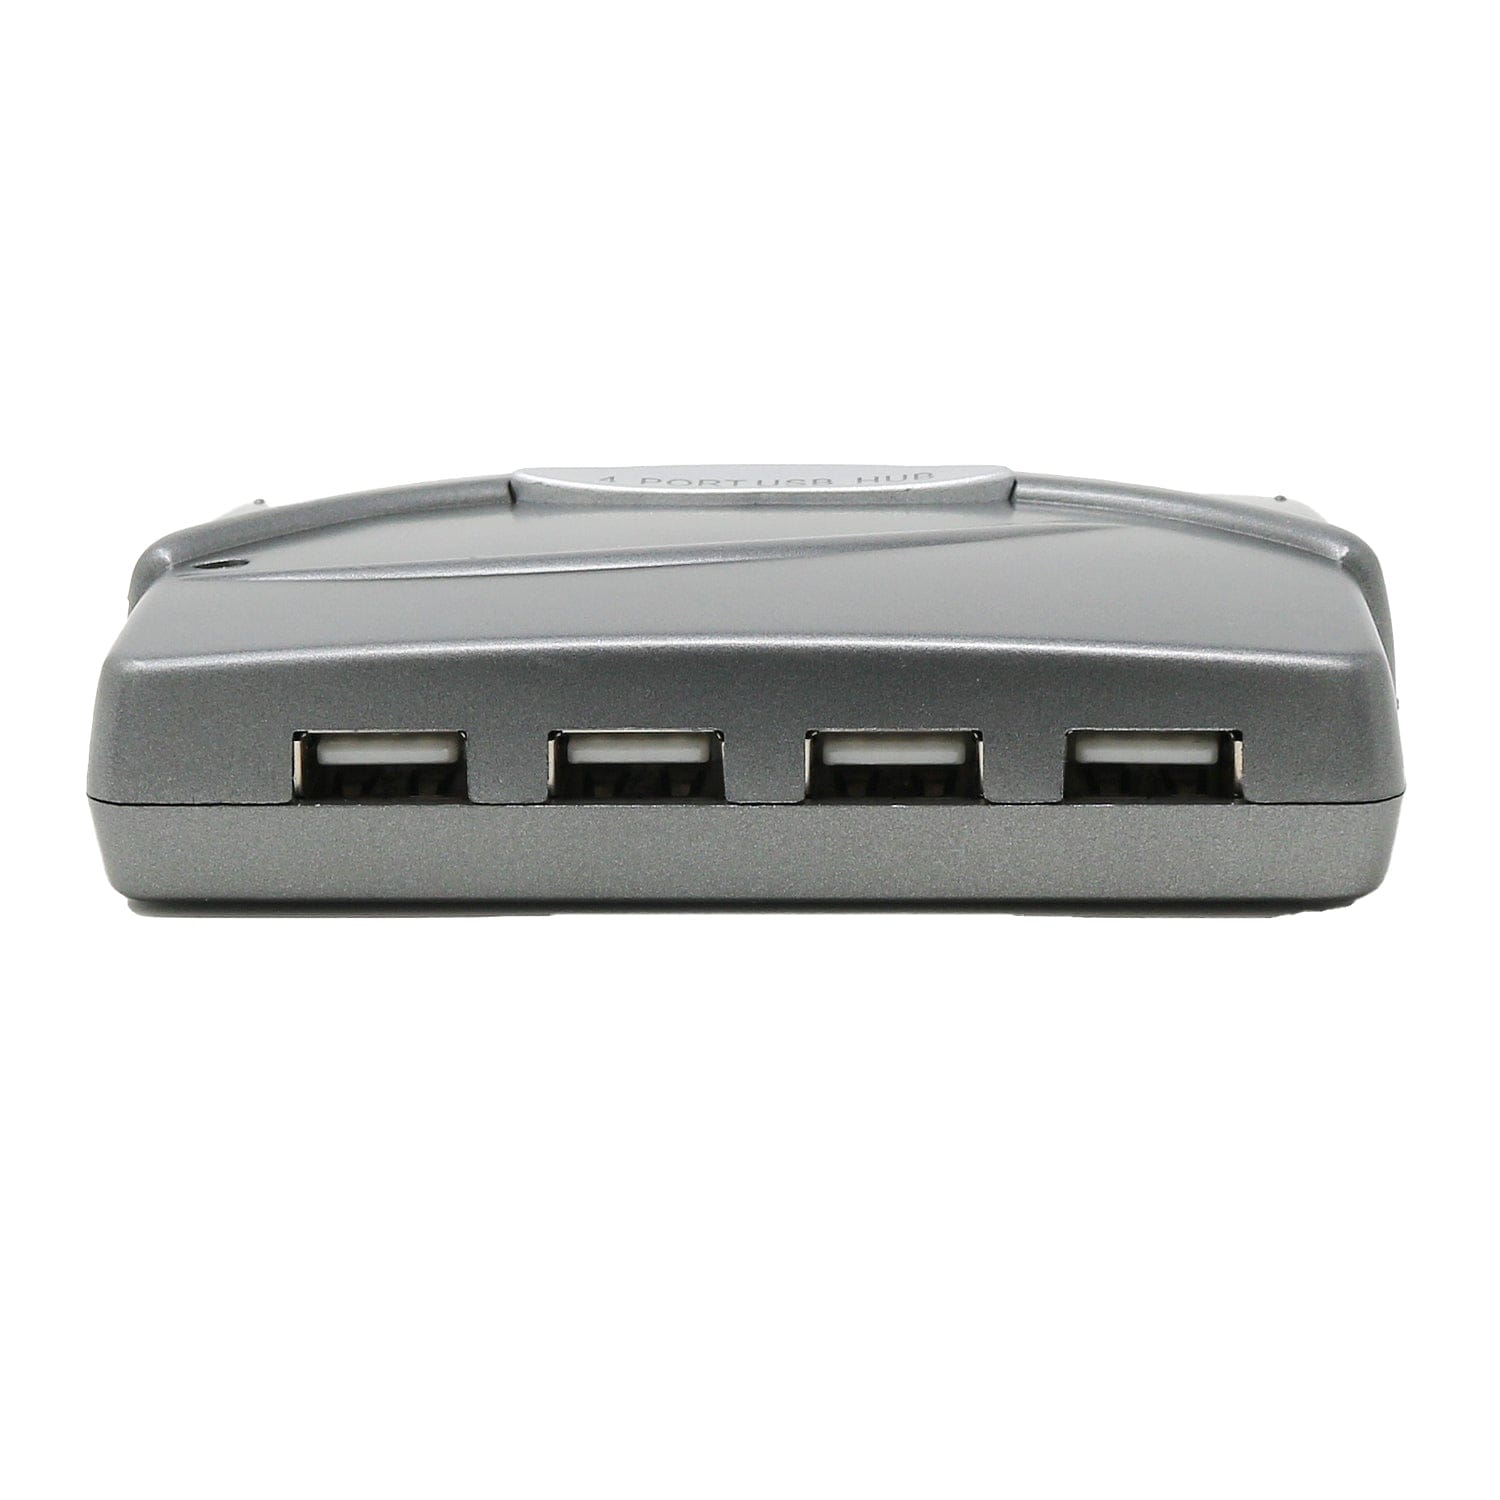 NewLink 4 Port USB Hub - UK 5V 2A - The Pi Hut